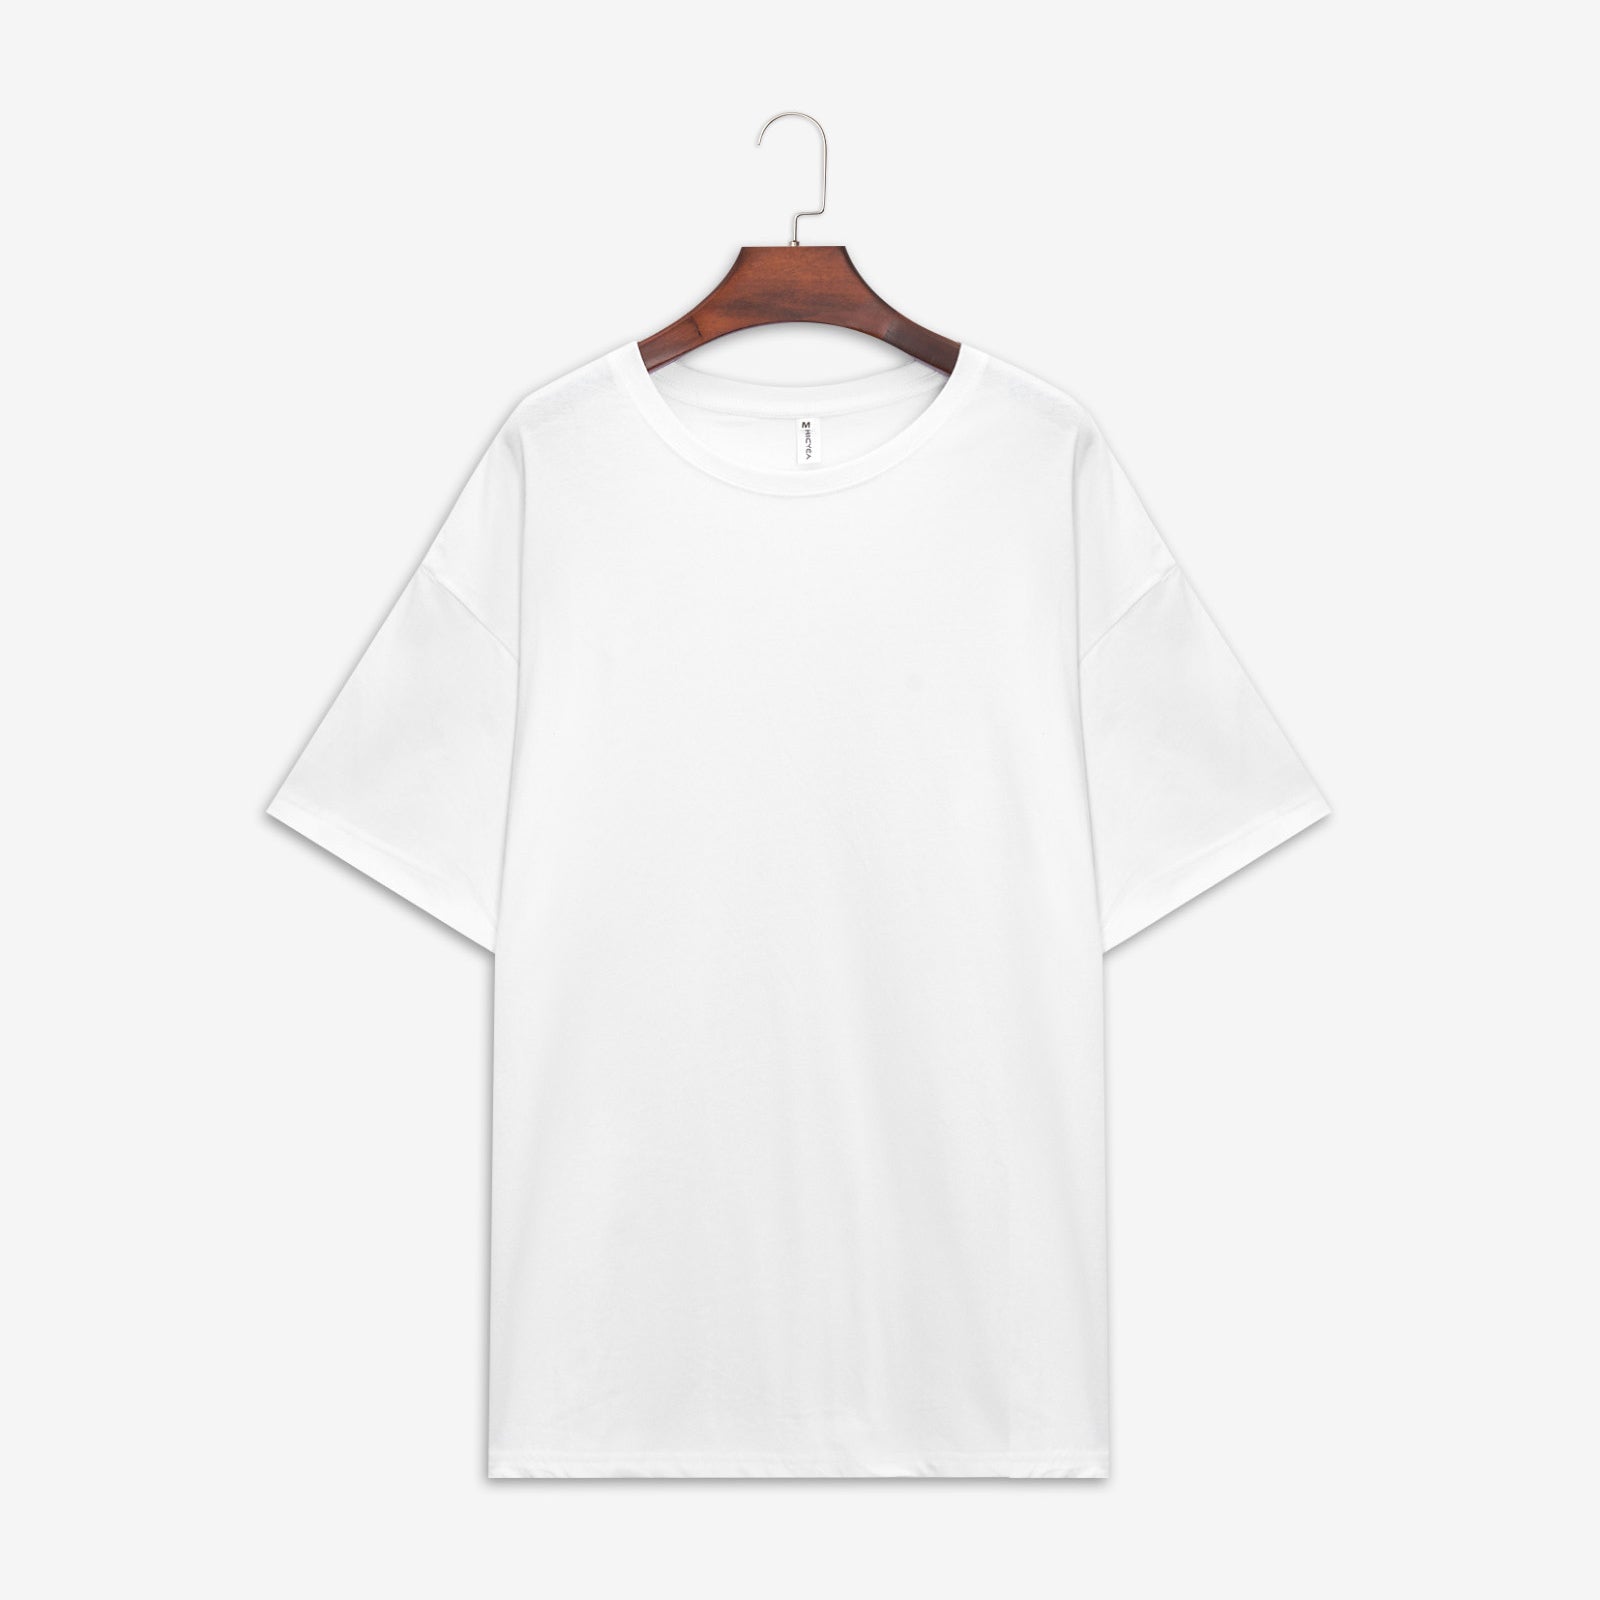 Minnieskull I'Ll Sleep Printed White T-Shirt